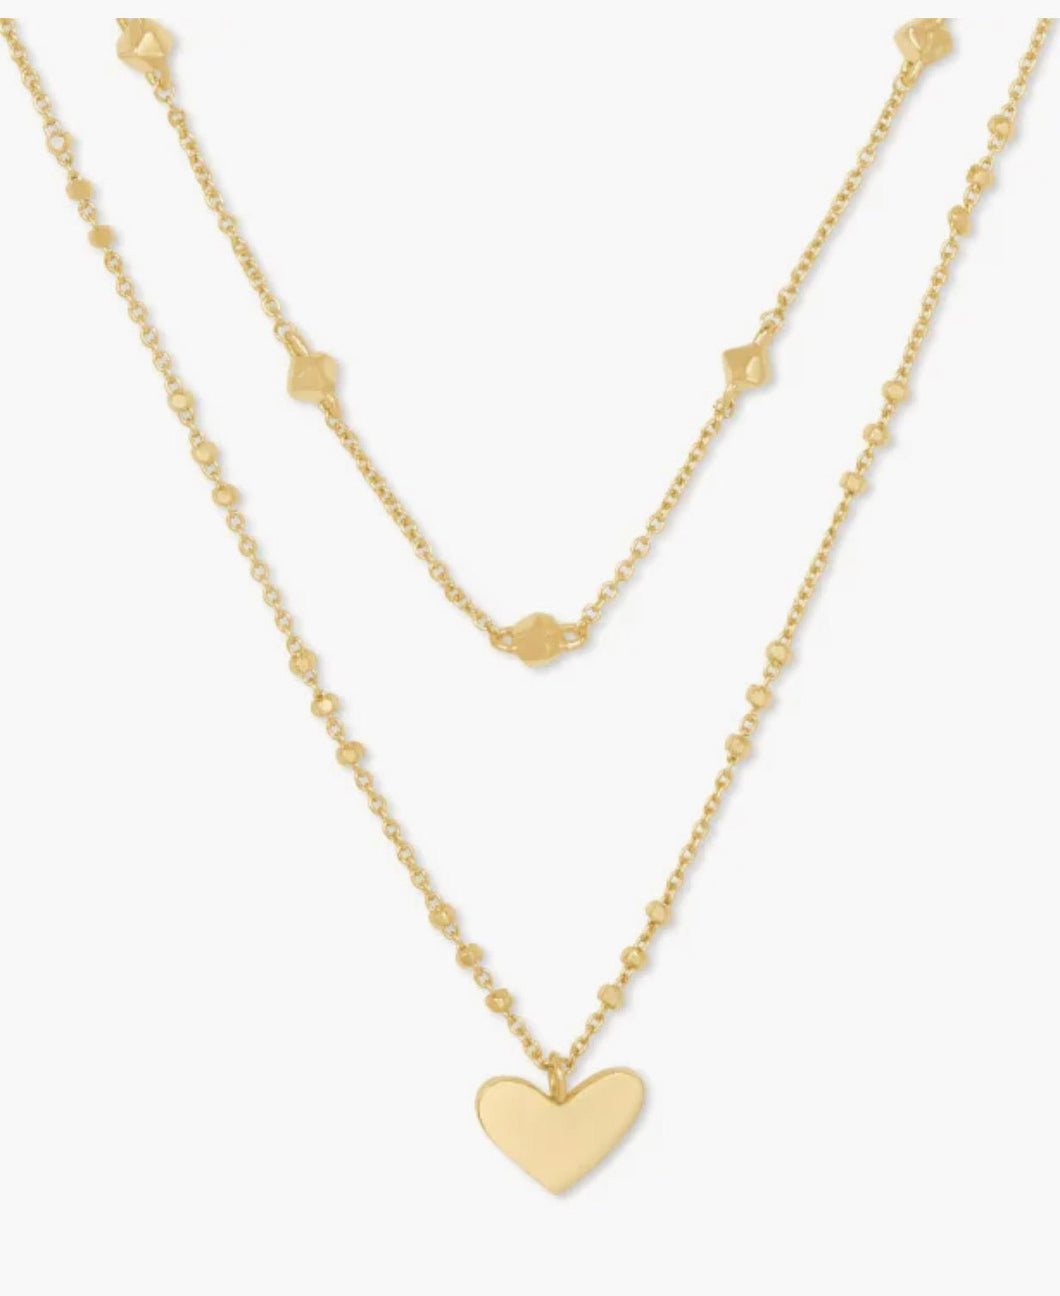 Kendra Scott-Ari Heart Multi Strand Necklace in Gold Metal 4217719033